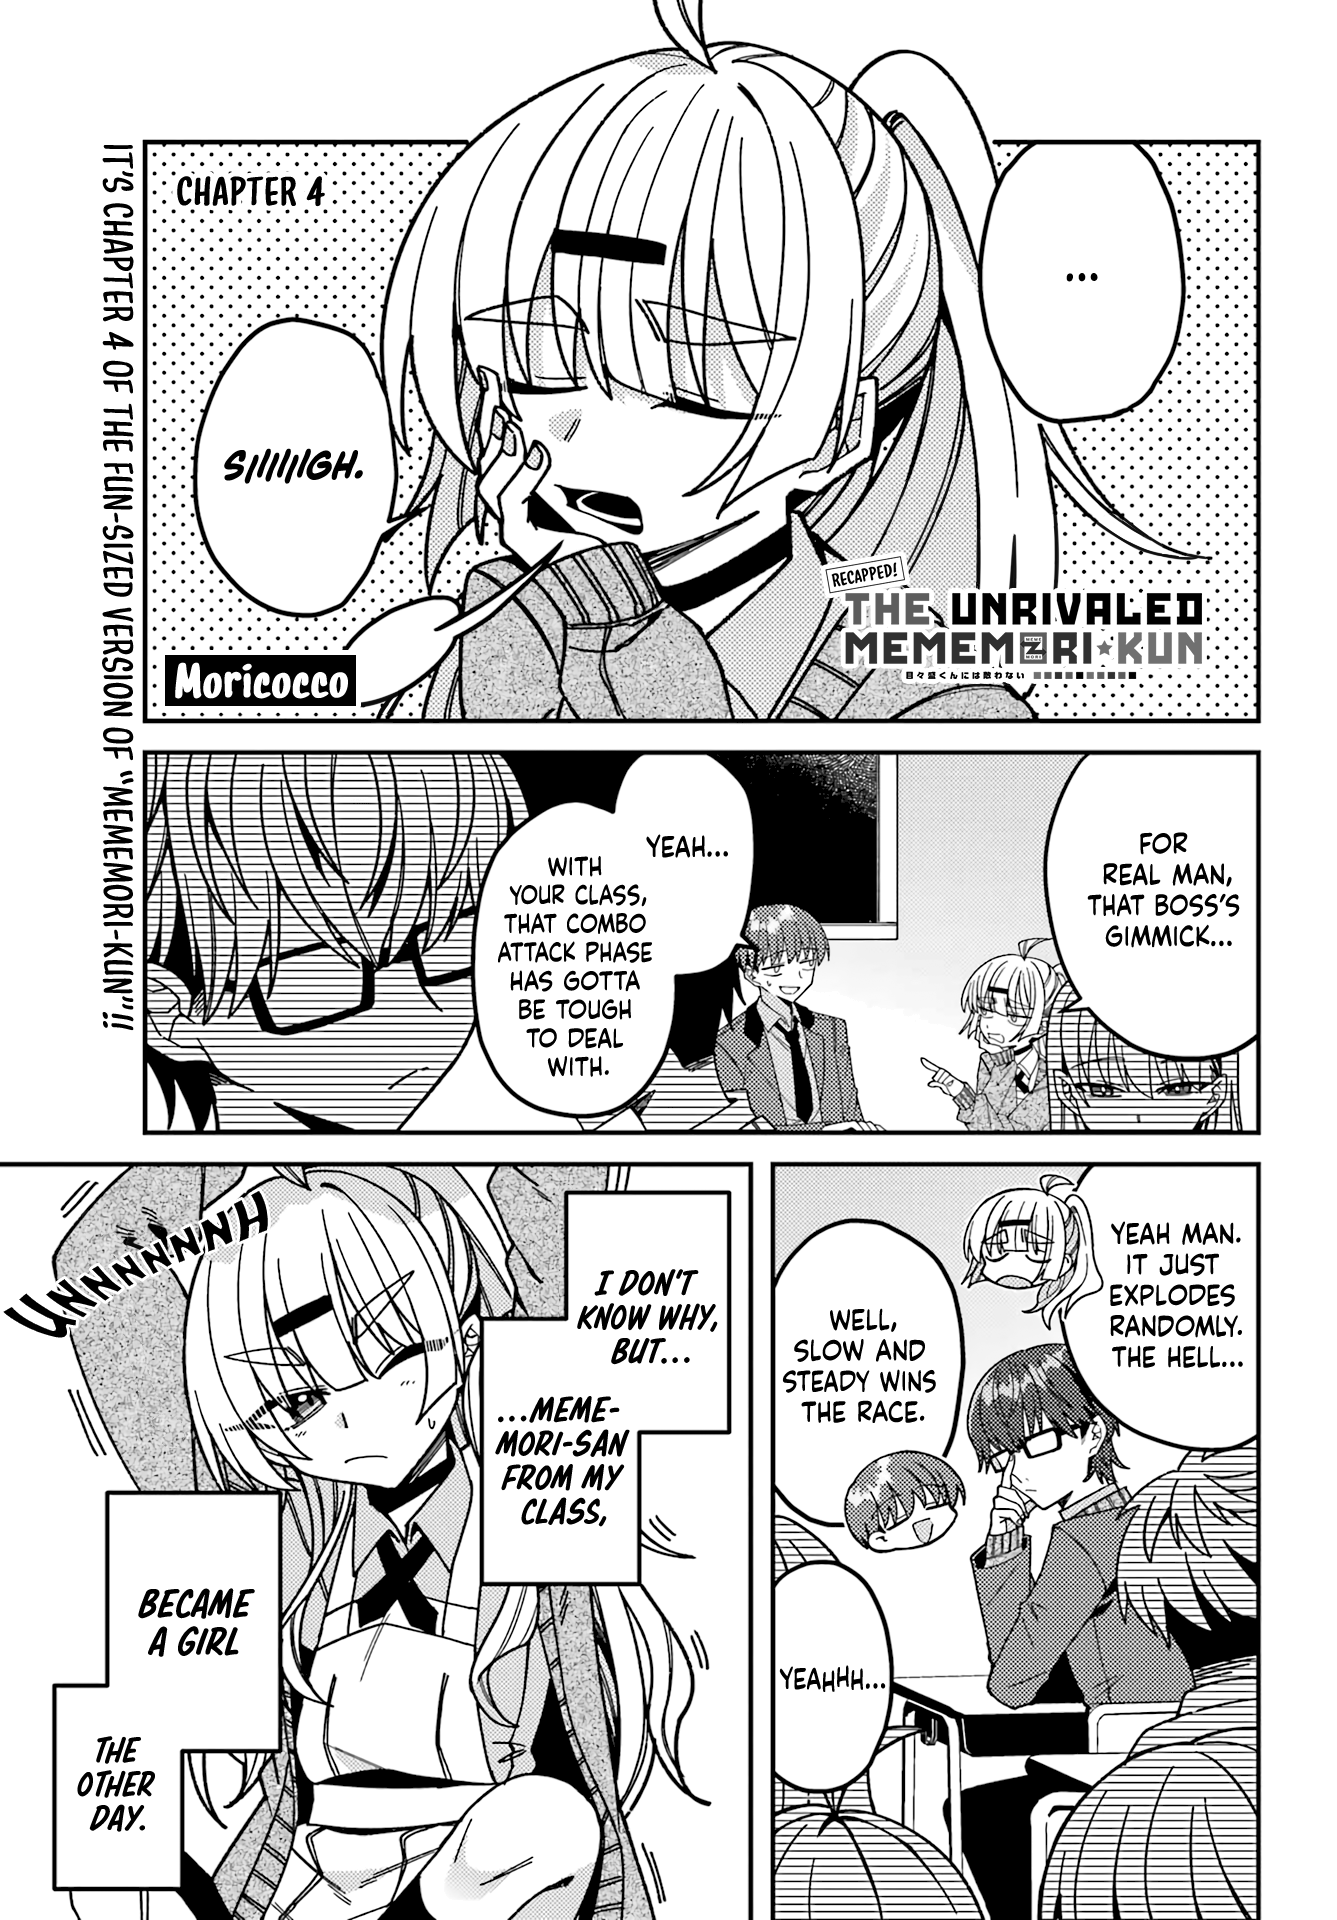 Unparalleled Mememori-Kun - Page 1